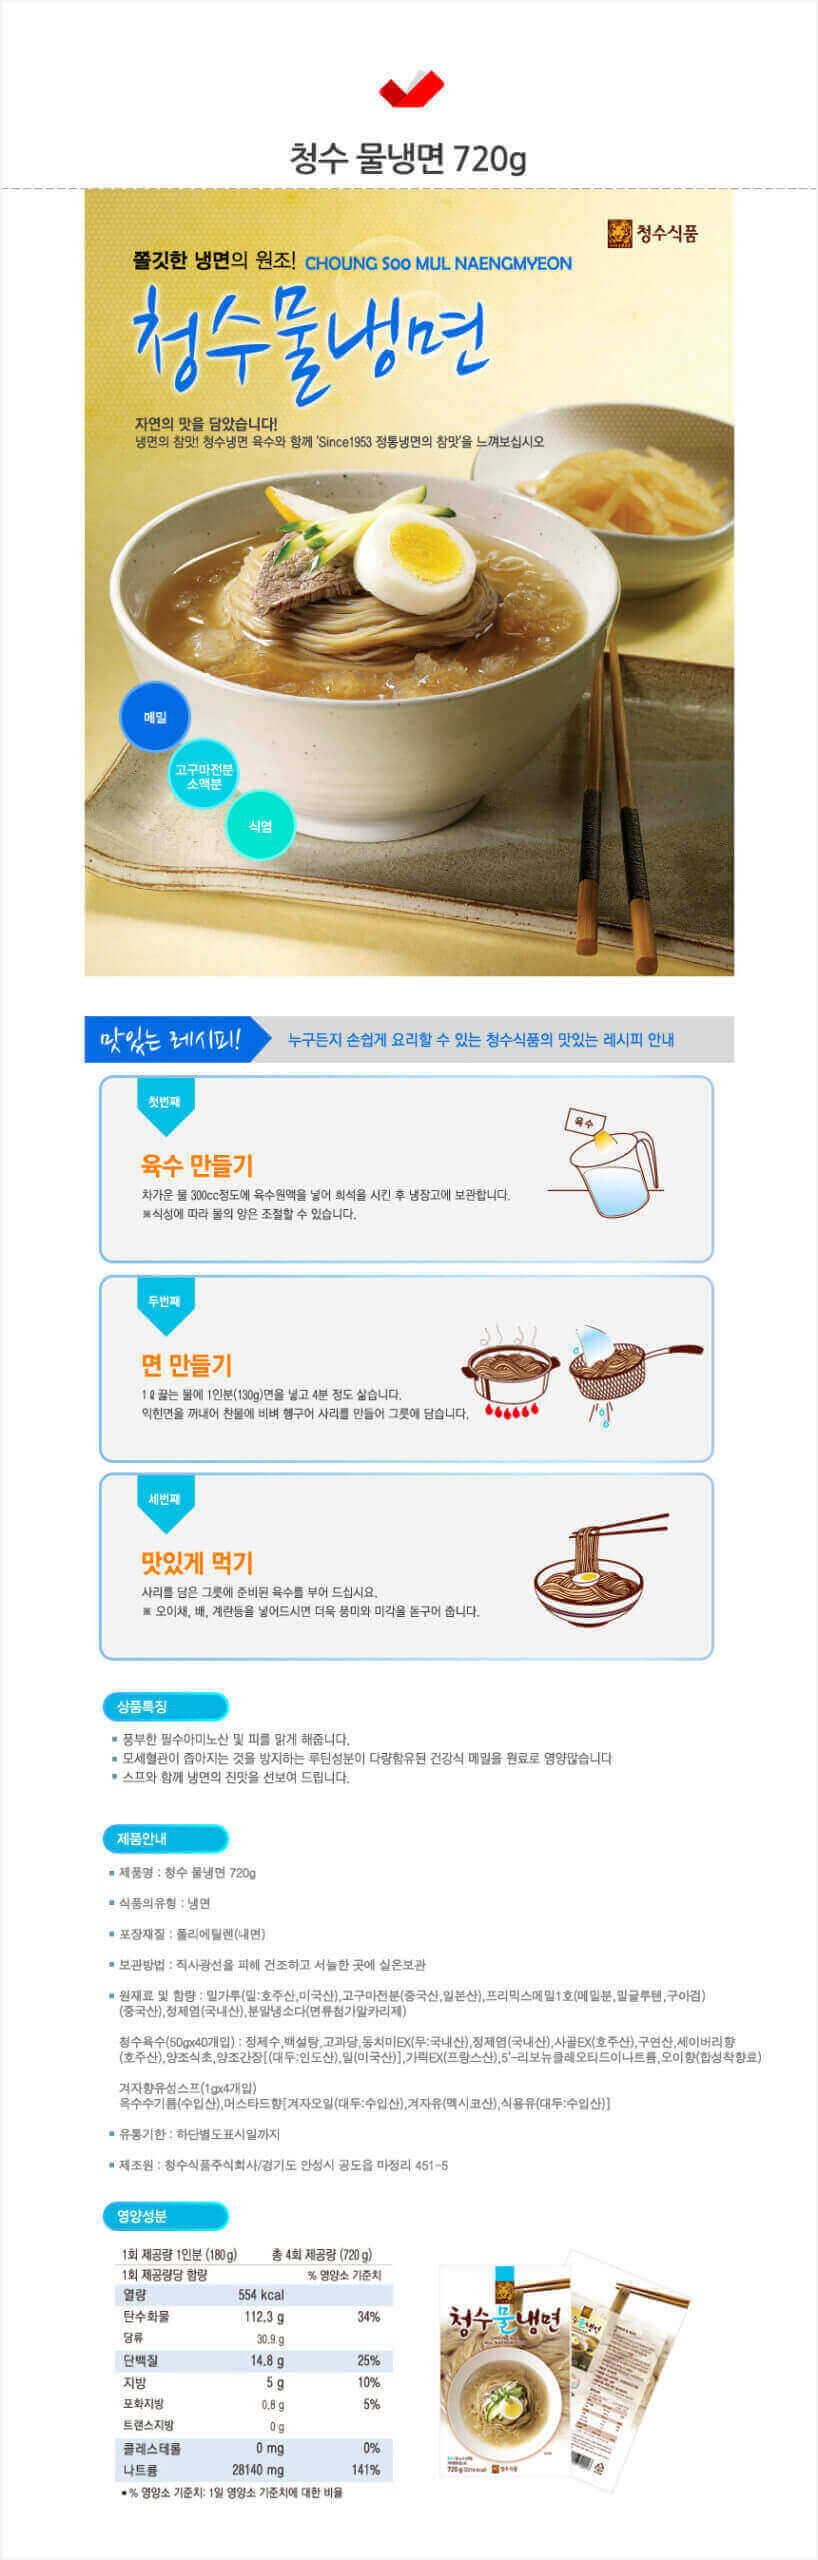 韓國食品-Choungsoo Cold Noodle 720g